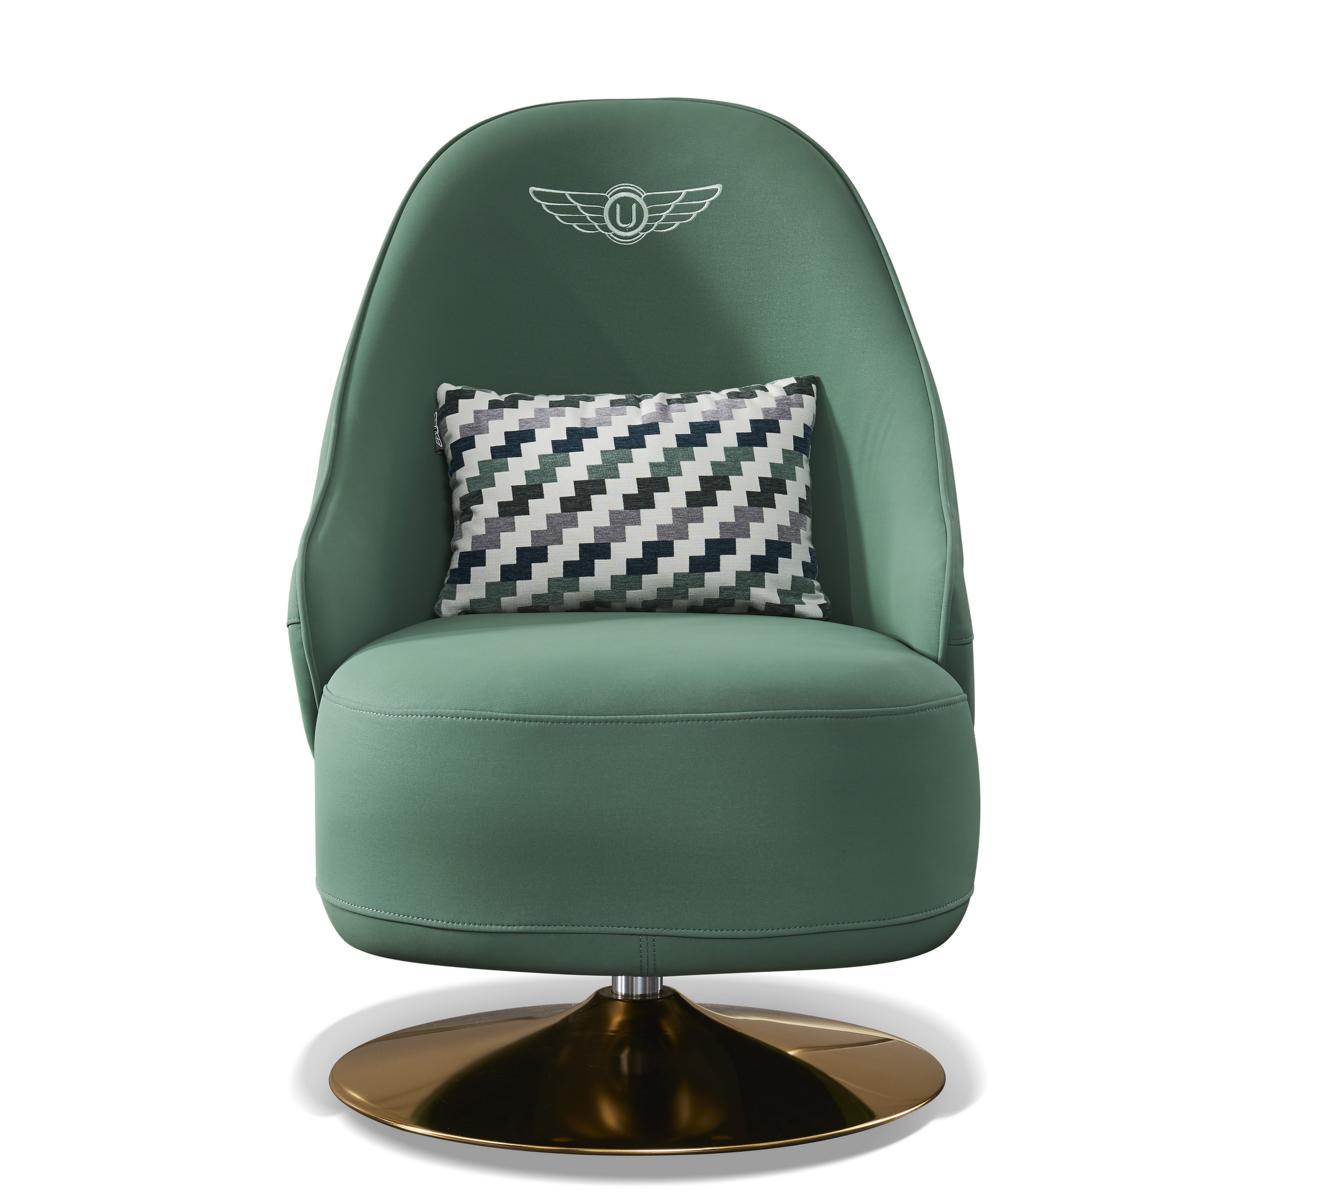 Polster Luxus Stuhl Cocktail Relax Lounge Club Stühle Möbel Design Sessel